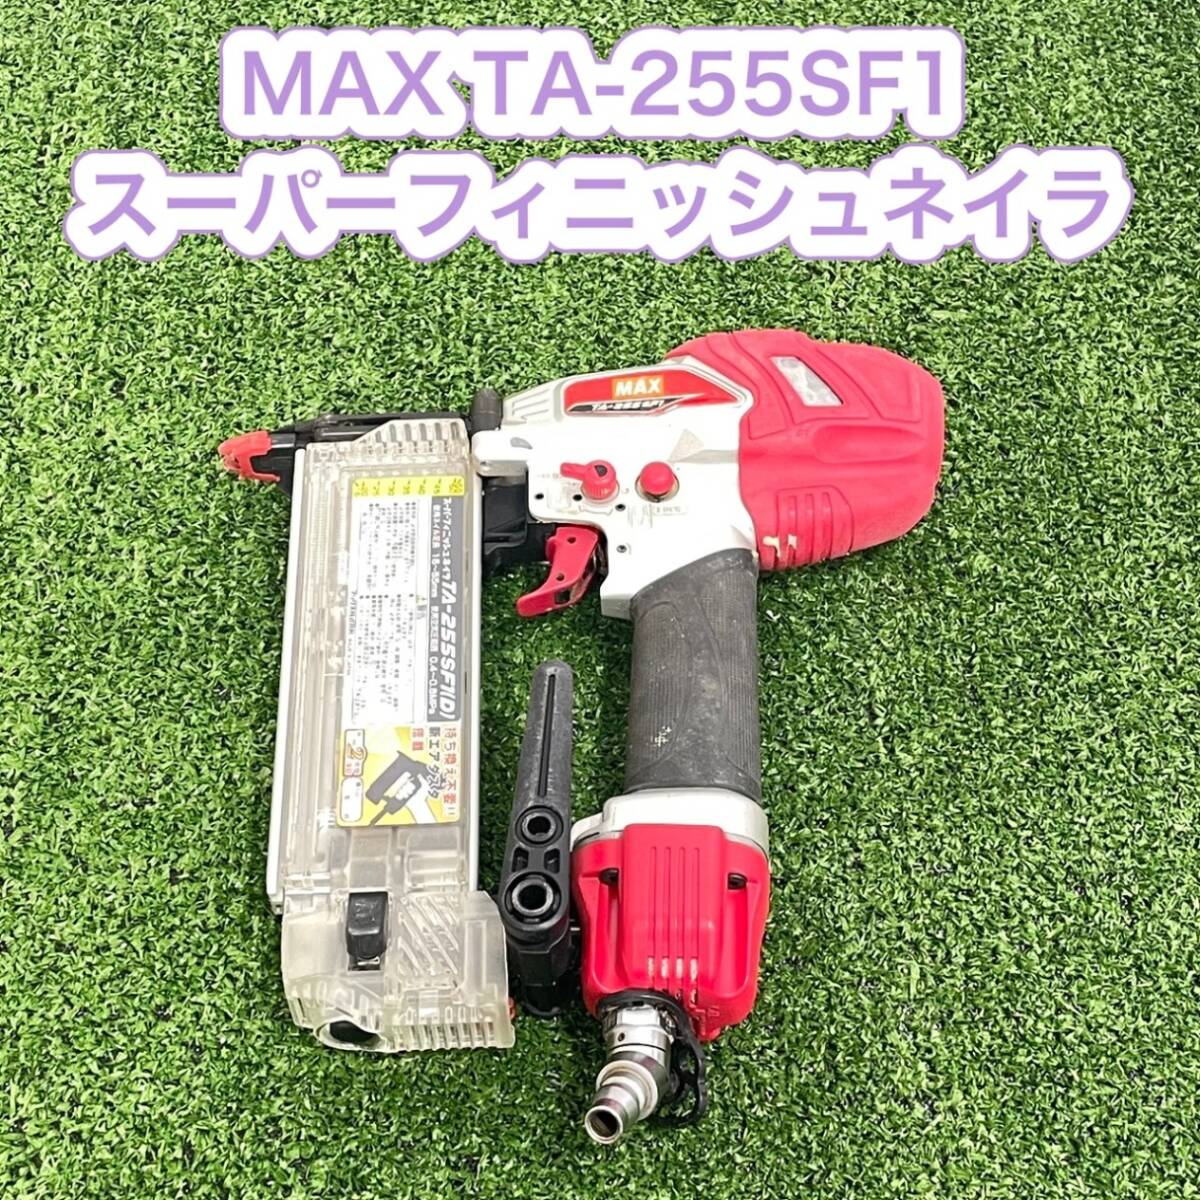 MAX マックス TA-255SF1(D) 55mm 常圧 スーパーフィニッシュネイラ 釘打機 釘打ち機 エアツール 【動作確認動画有り】h0328-1-2b_画像1